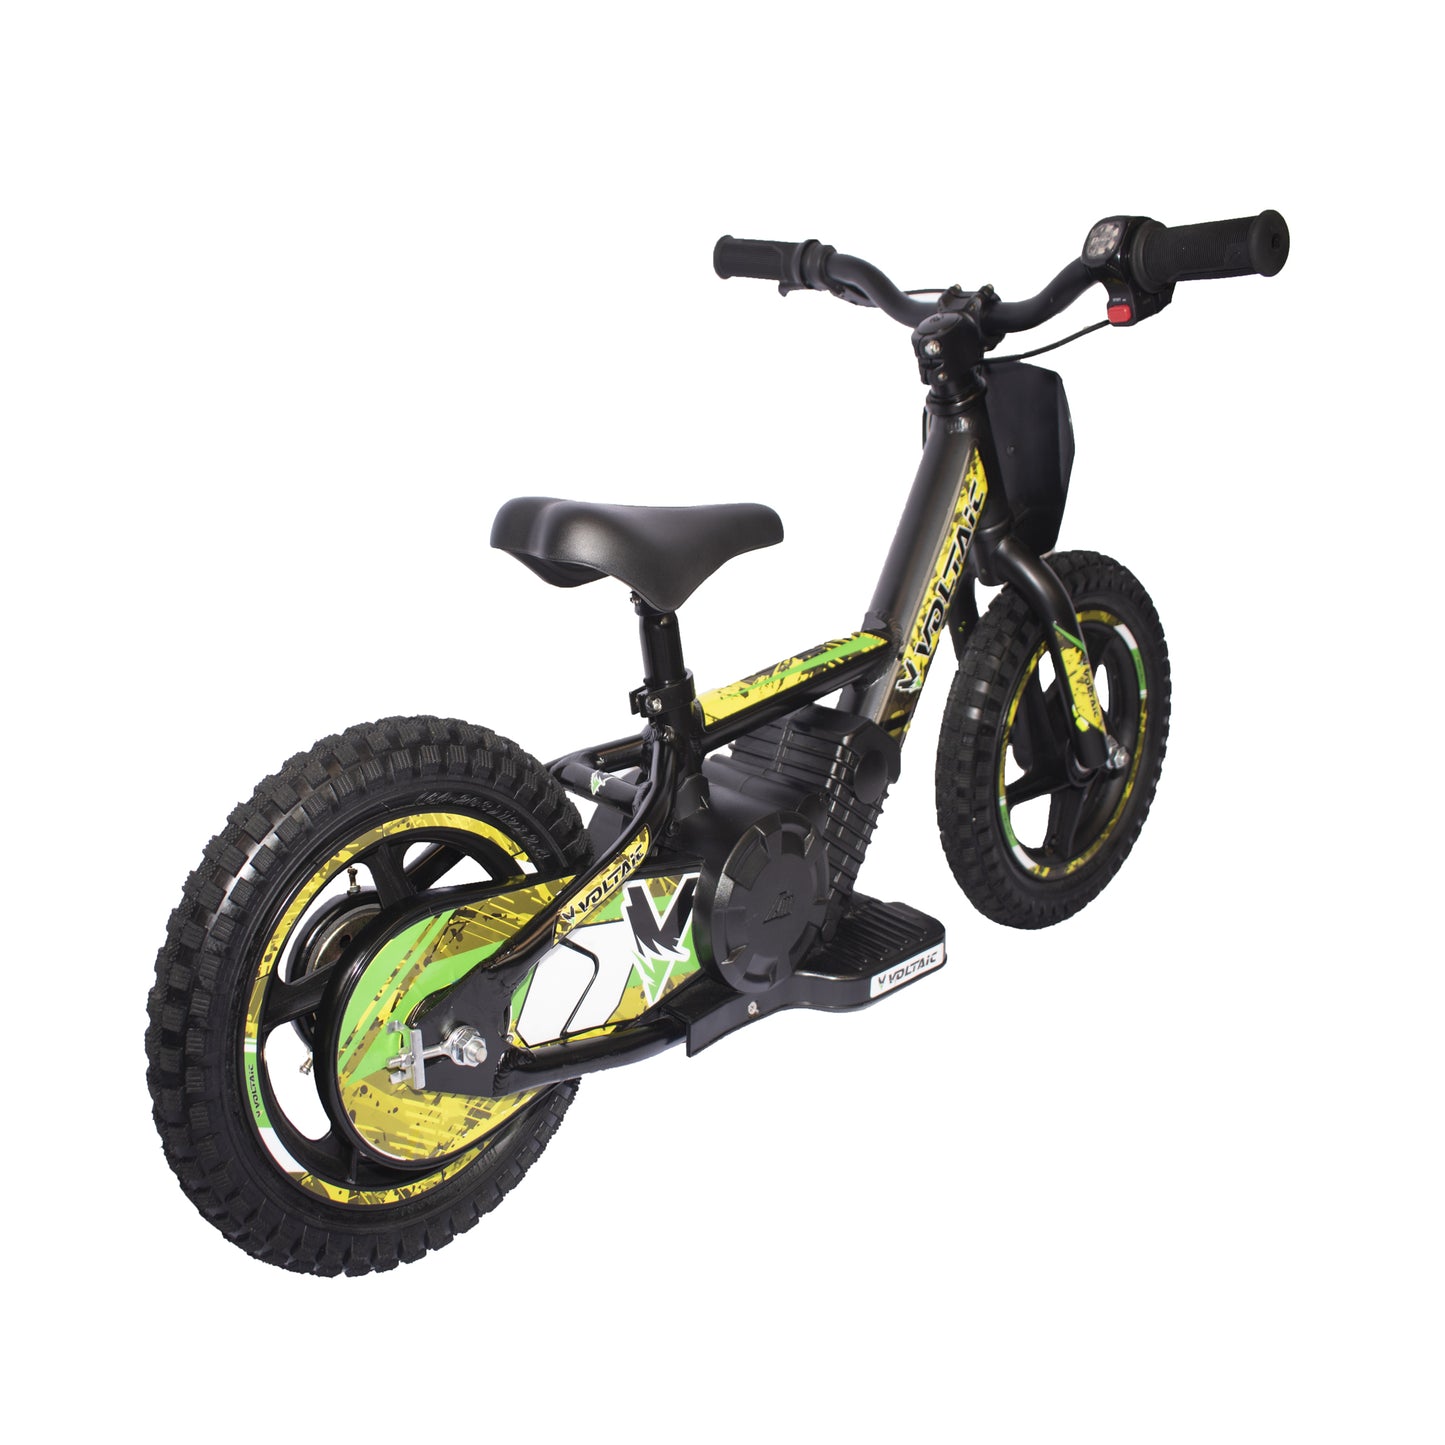 Voltaic Kids Electric Dirt Bike 12'' Cub for sale back